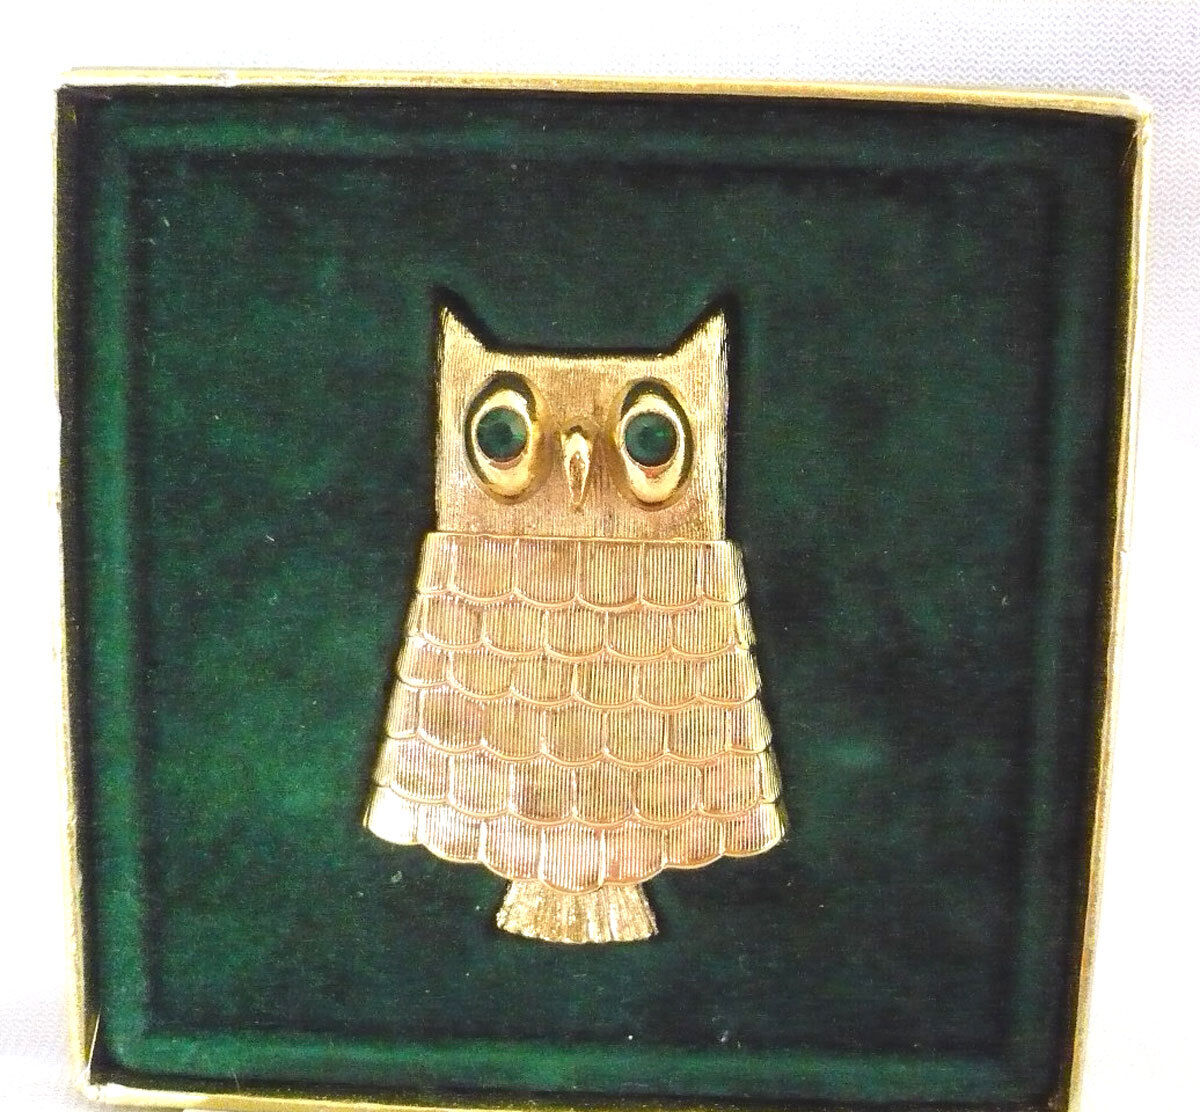 Vintage Avon gold Owl perfume pin brooch in original box 